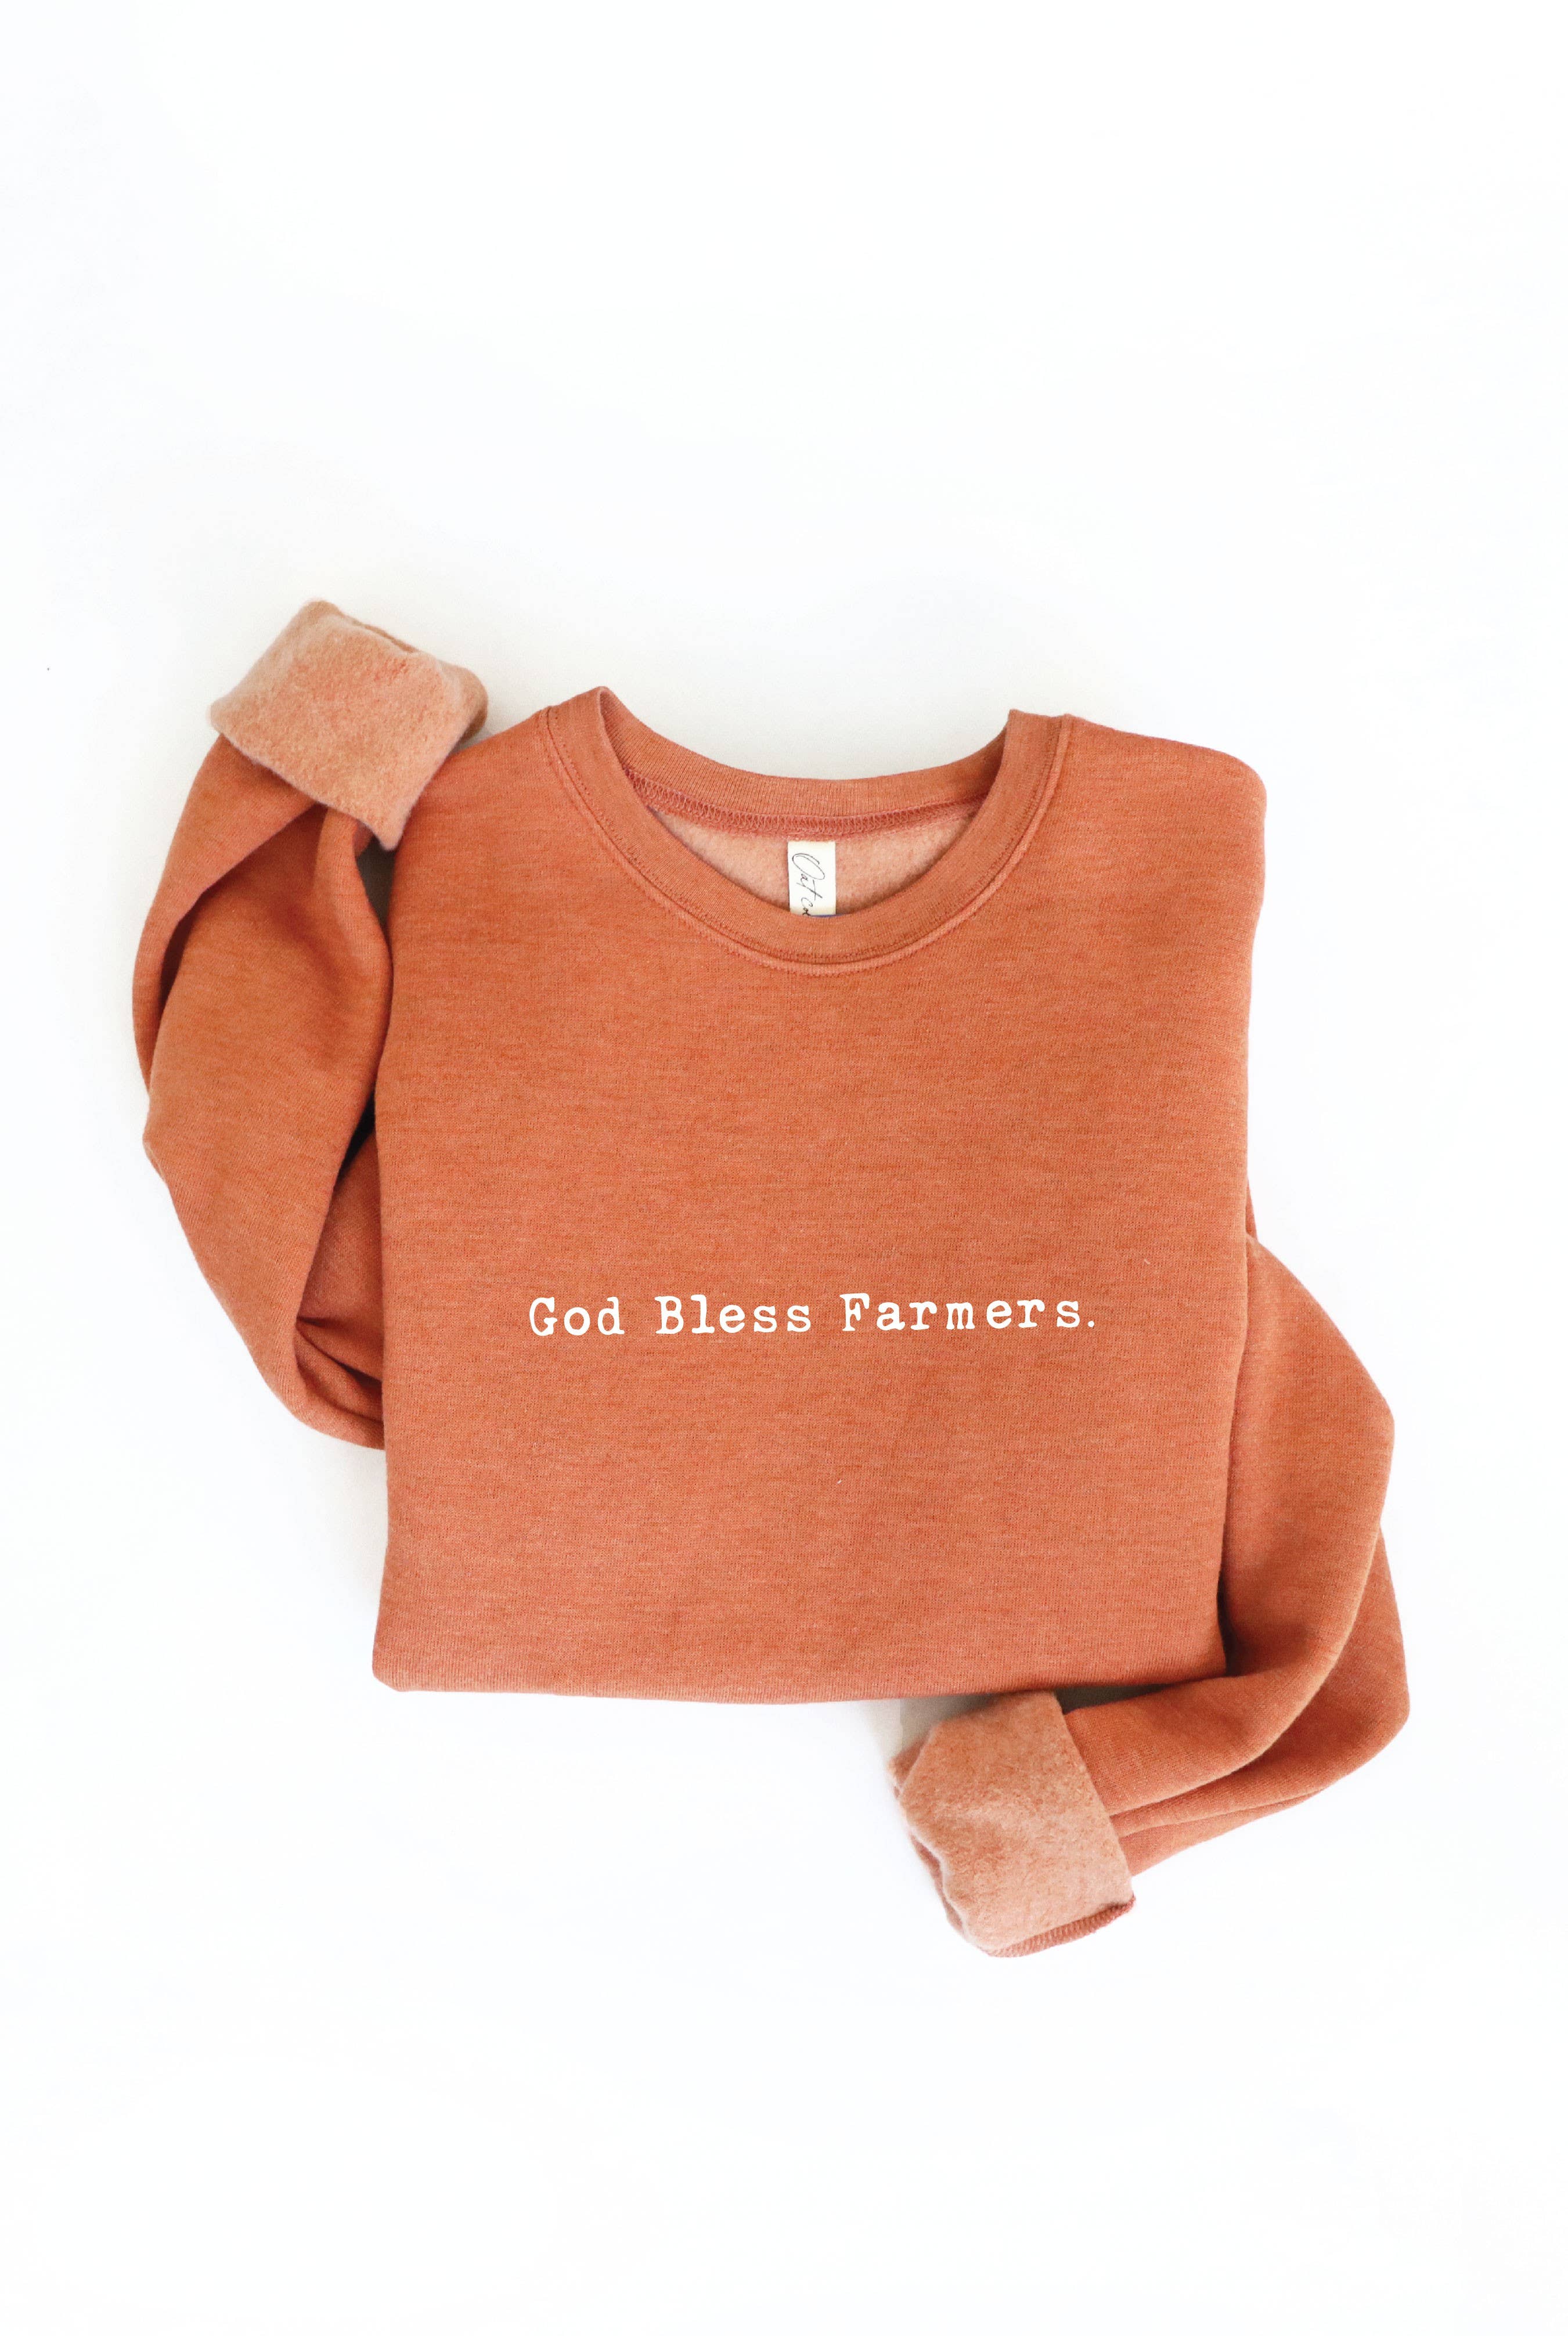 GOD BLESS FARMERS. Graphic Sweatshirt: L / VINTAGE WHITE LONG SLEEVE